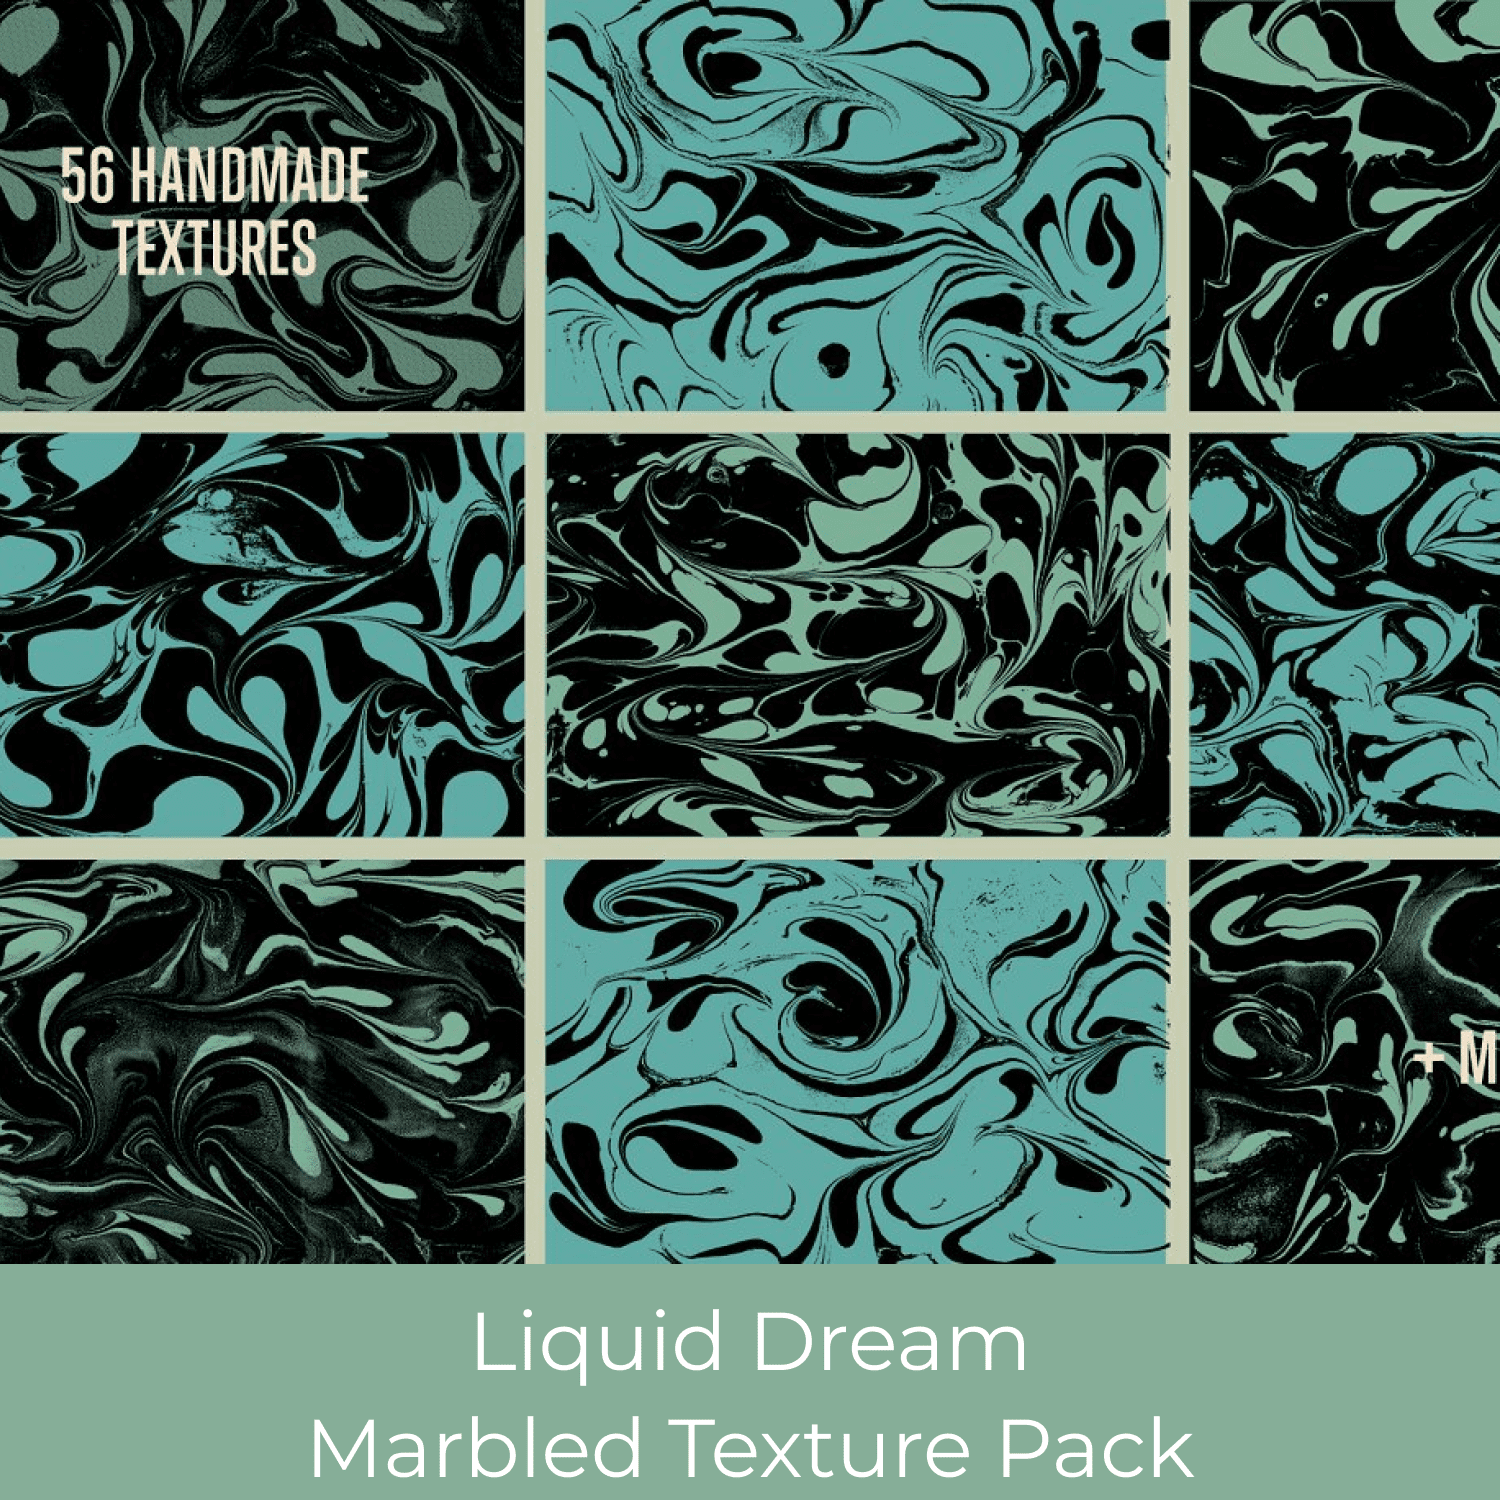 Liquid Dream Marbled Texture Pack cover.